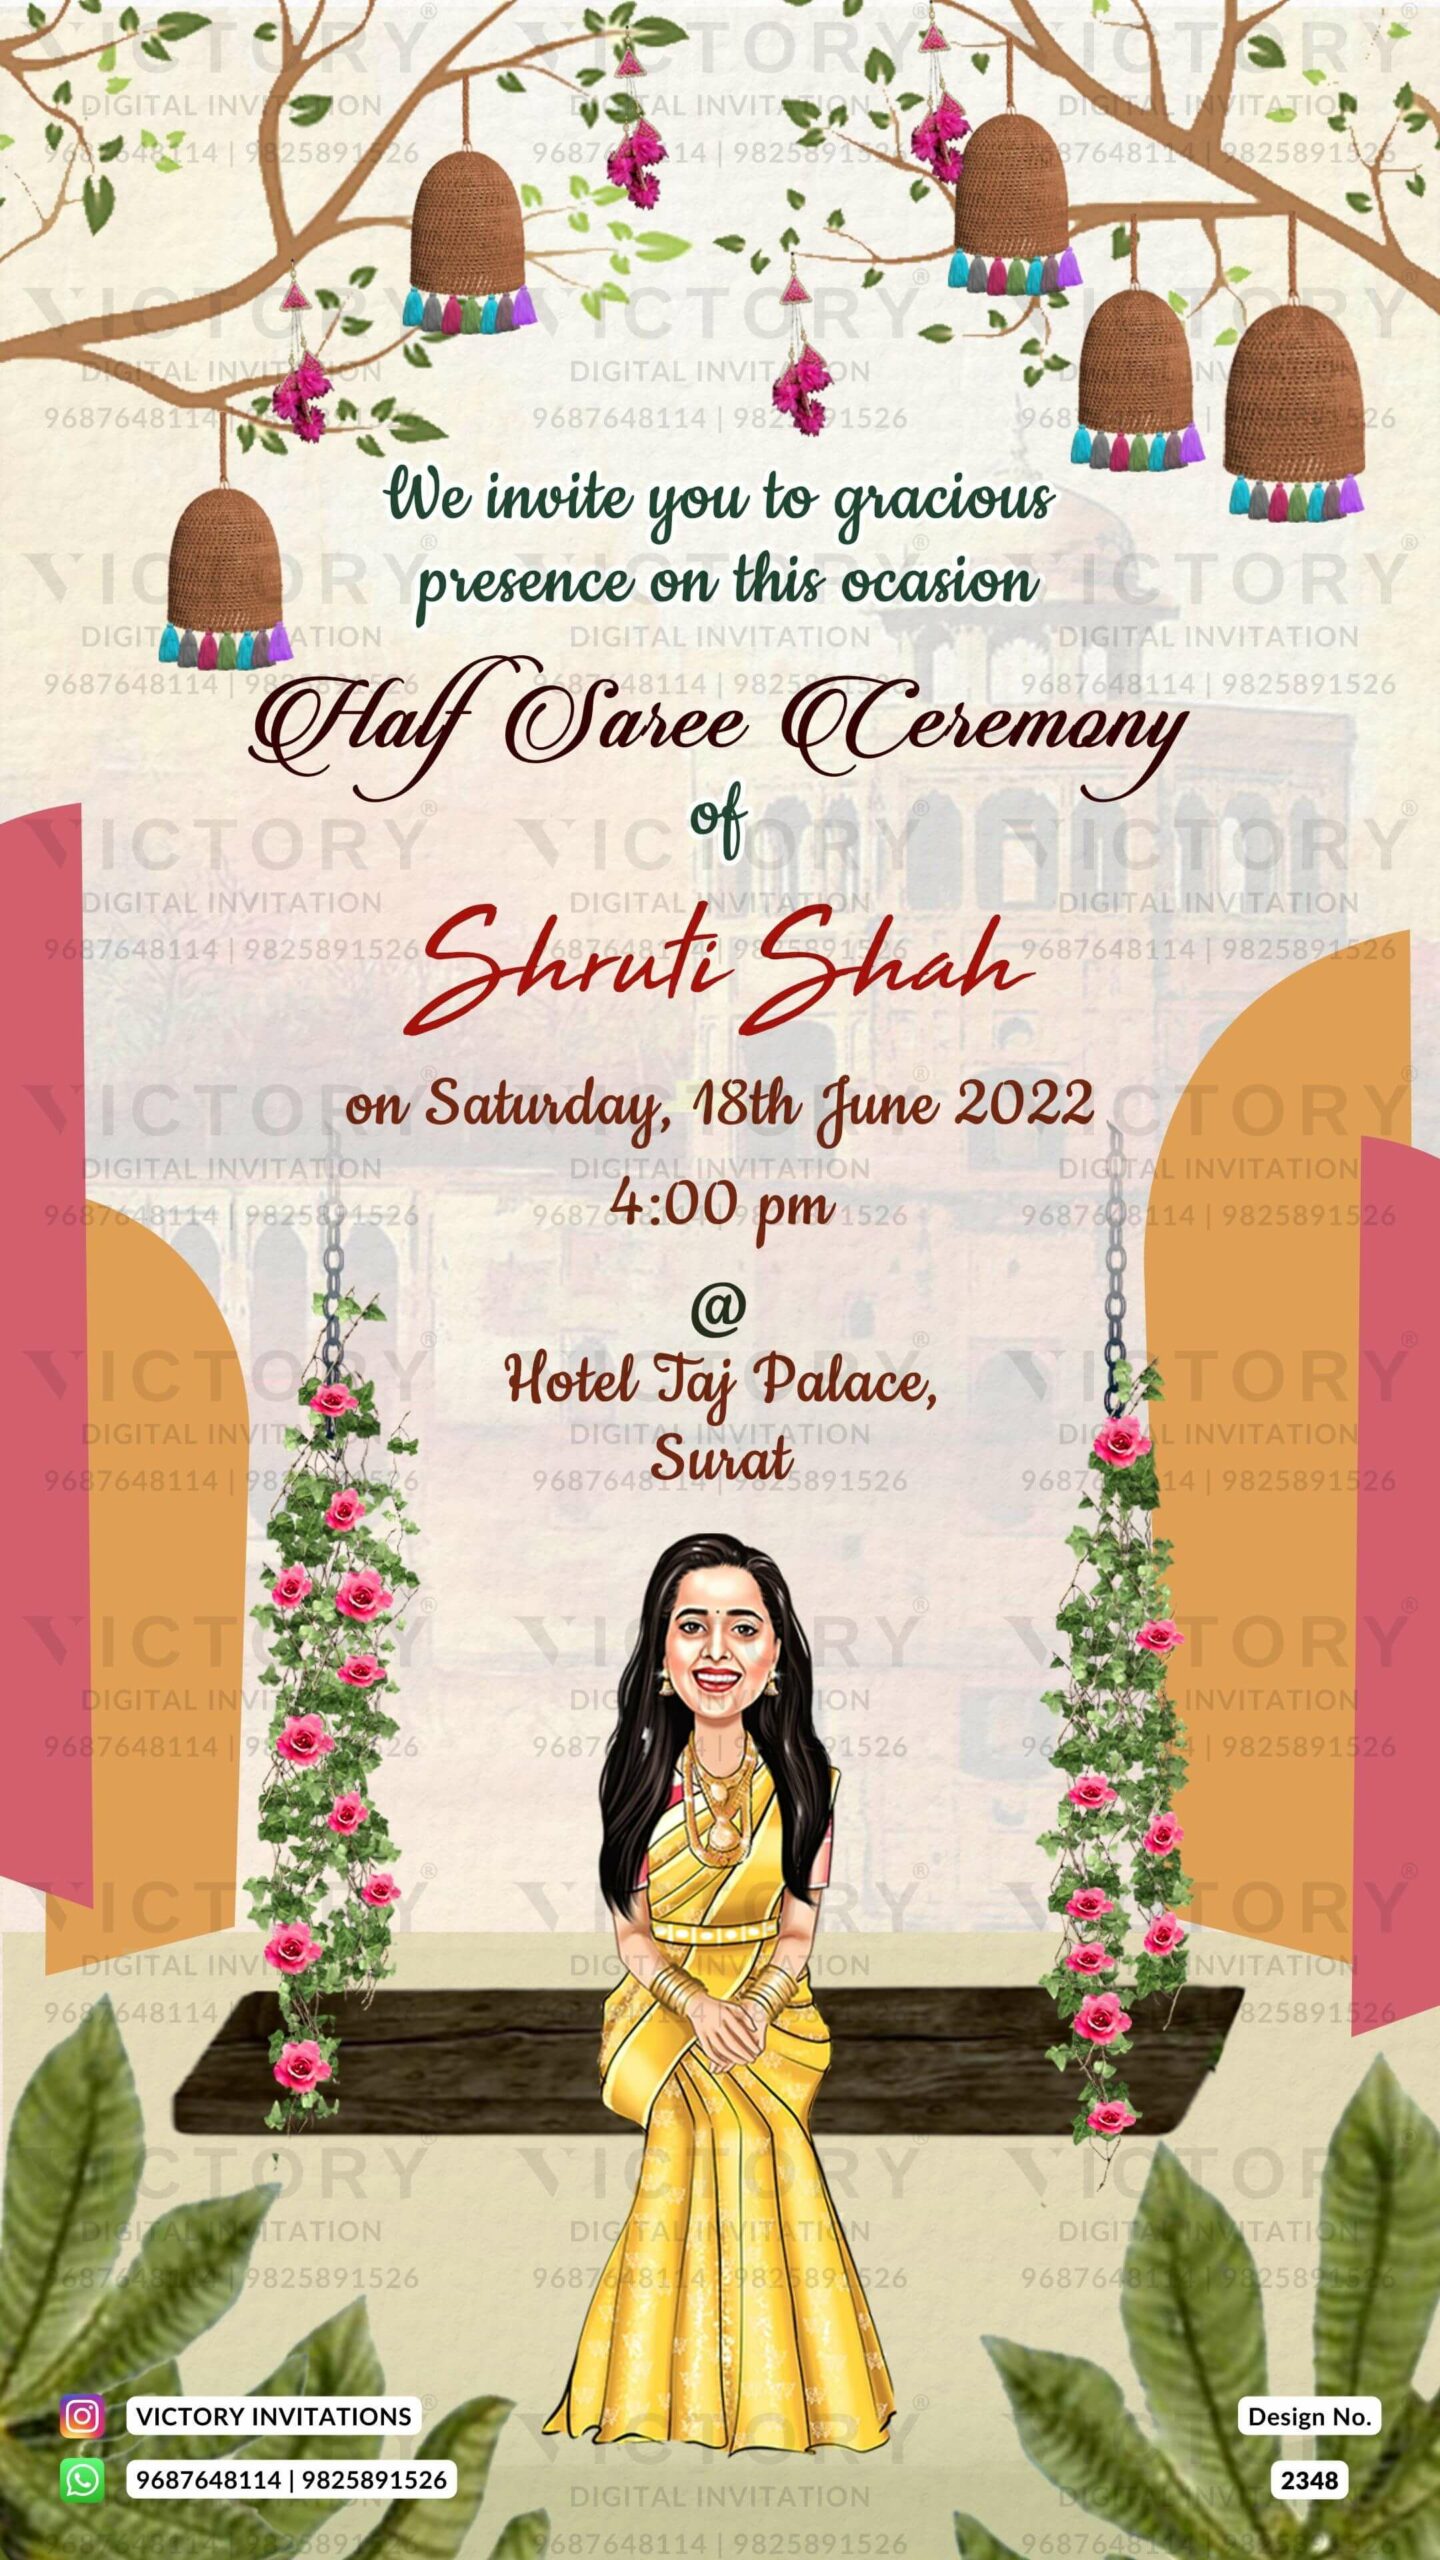 Half Saree Ceremony digital invitation card design no.2348